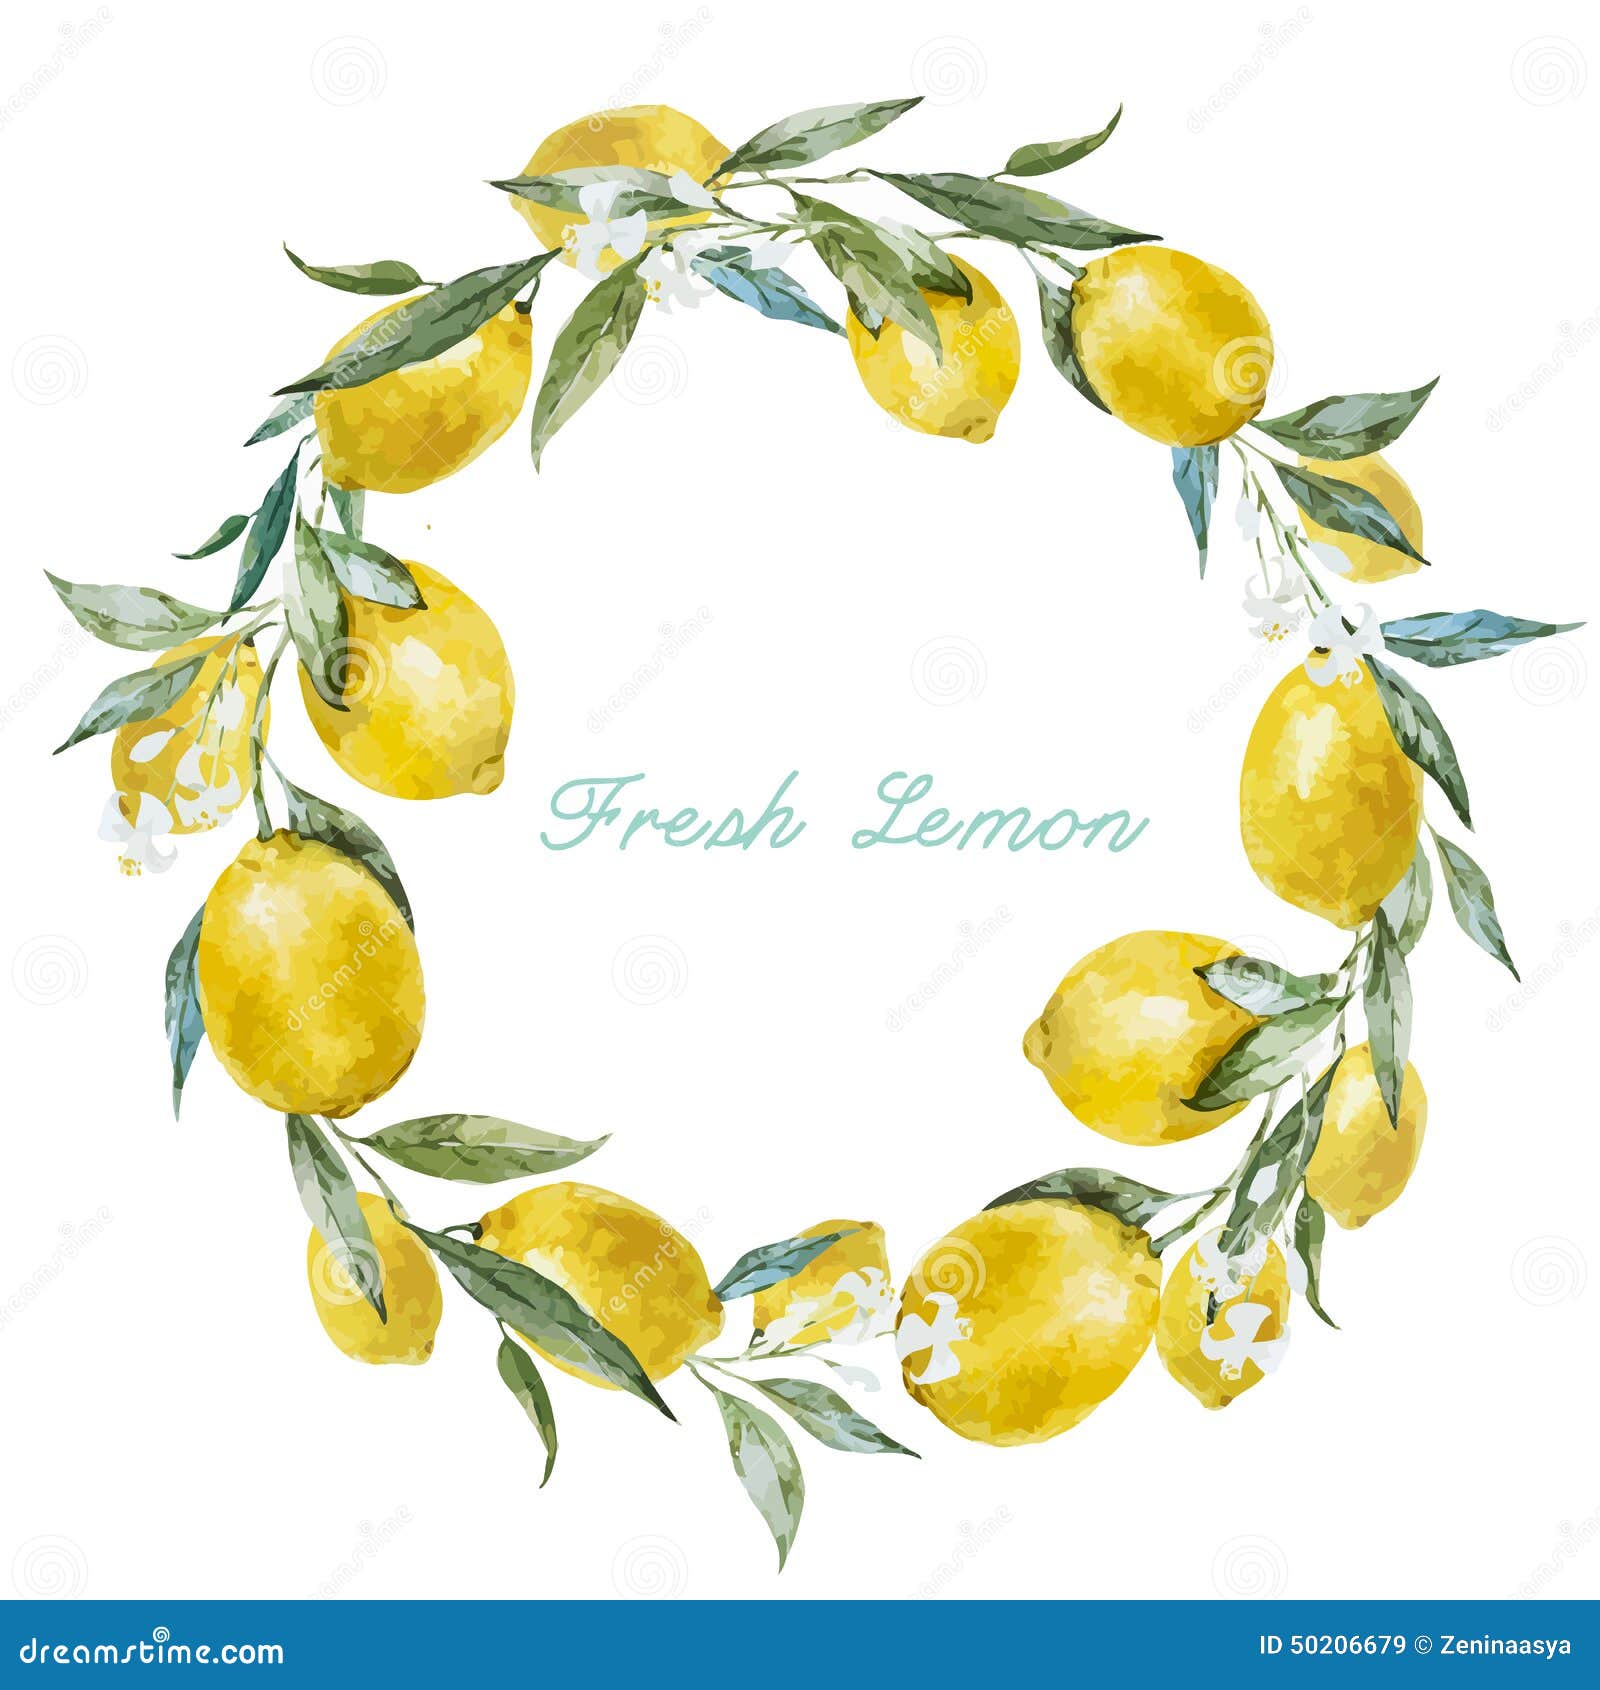 lemon border clip art - photo #47